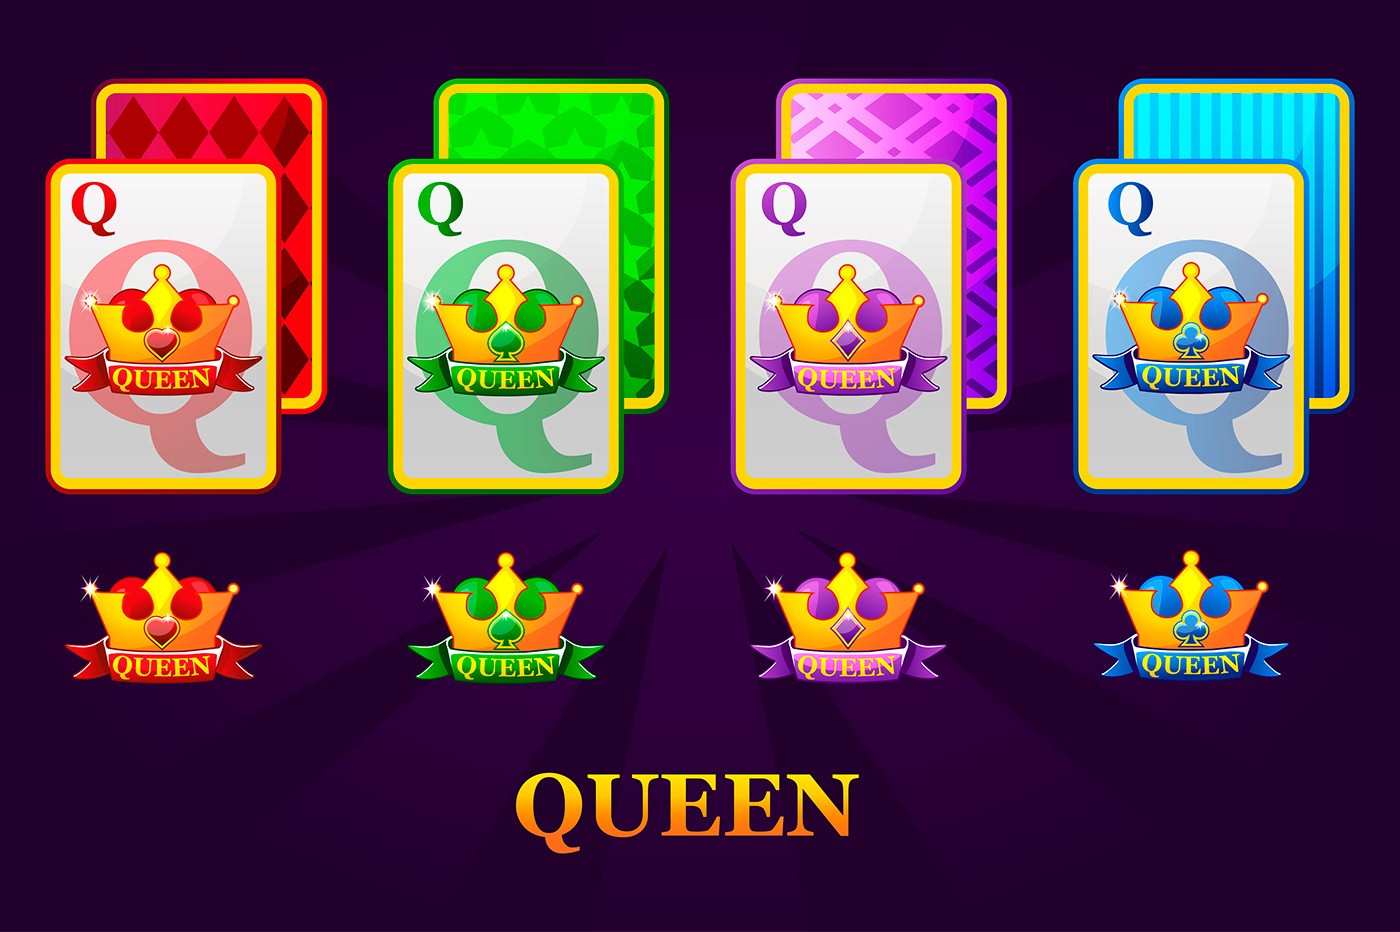 Poker casino Playing Cards suit joker KIND jack queen clubs diamonds